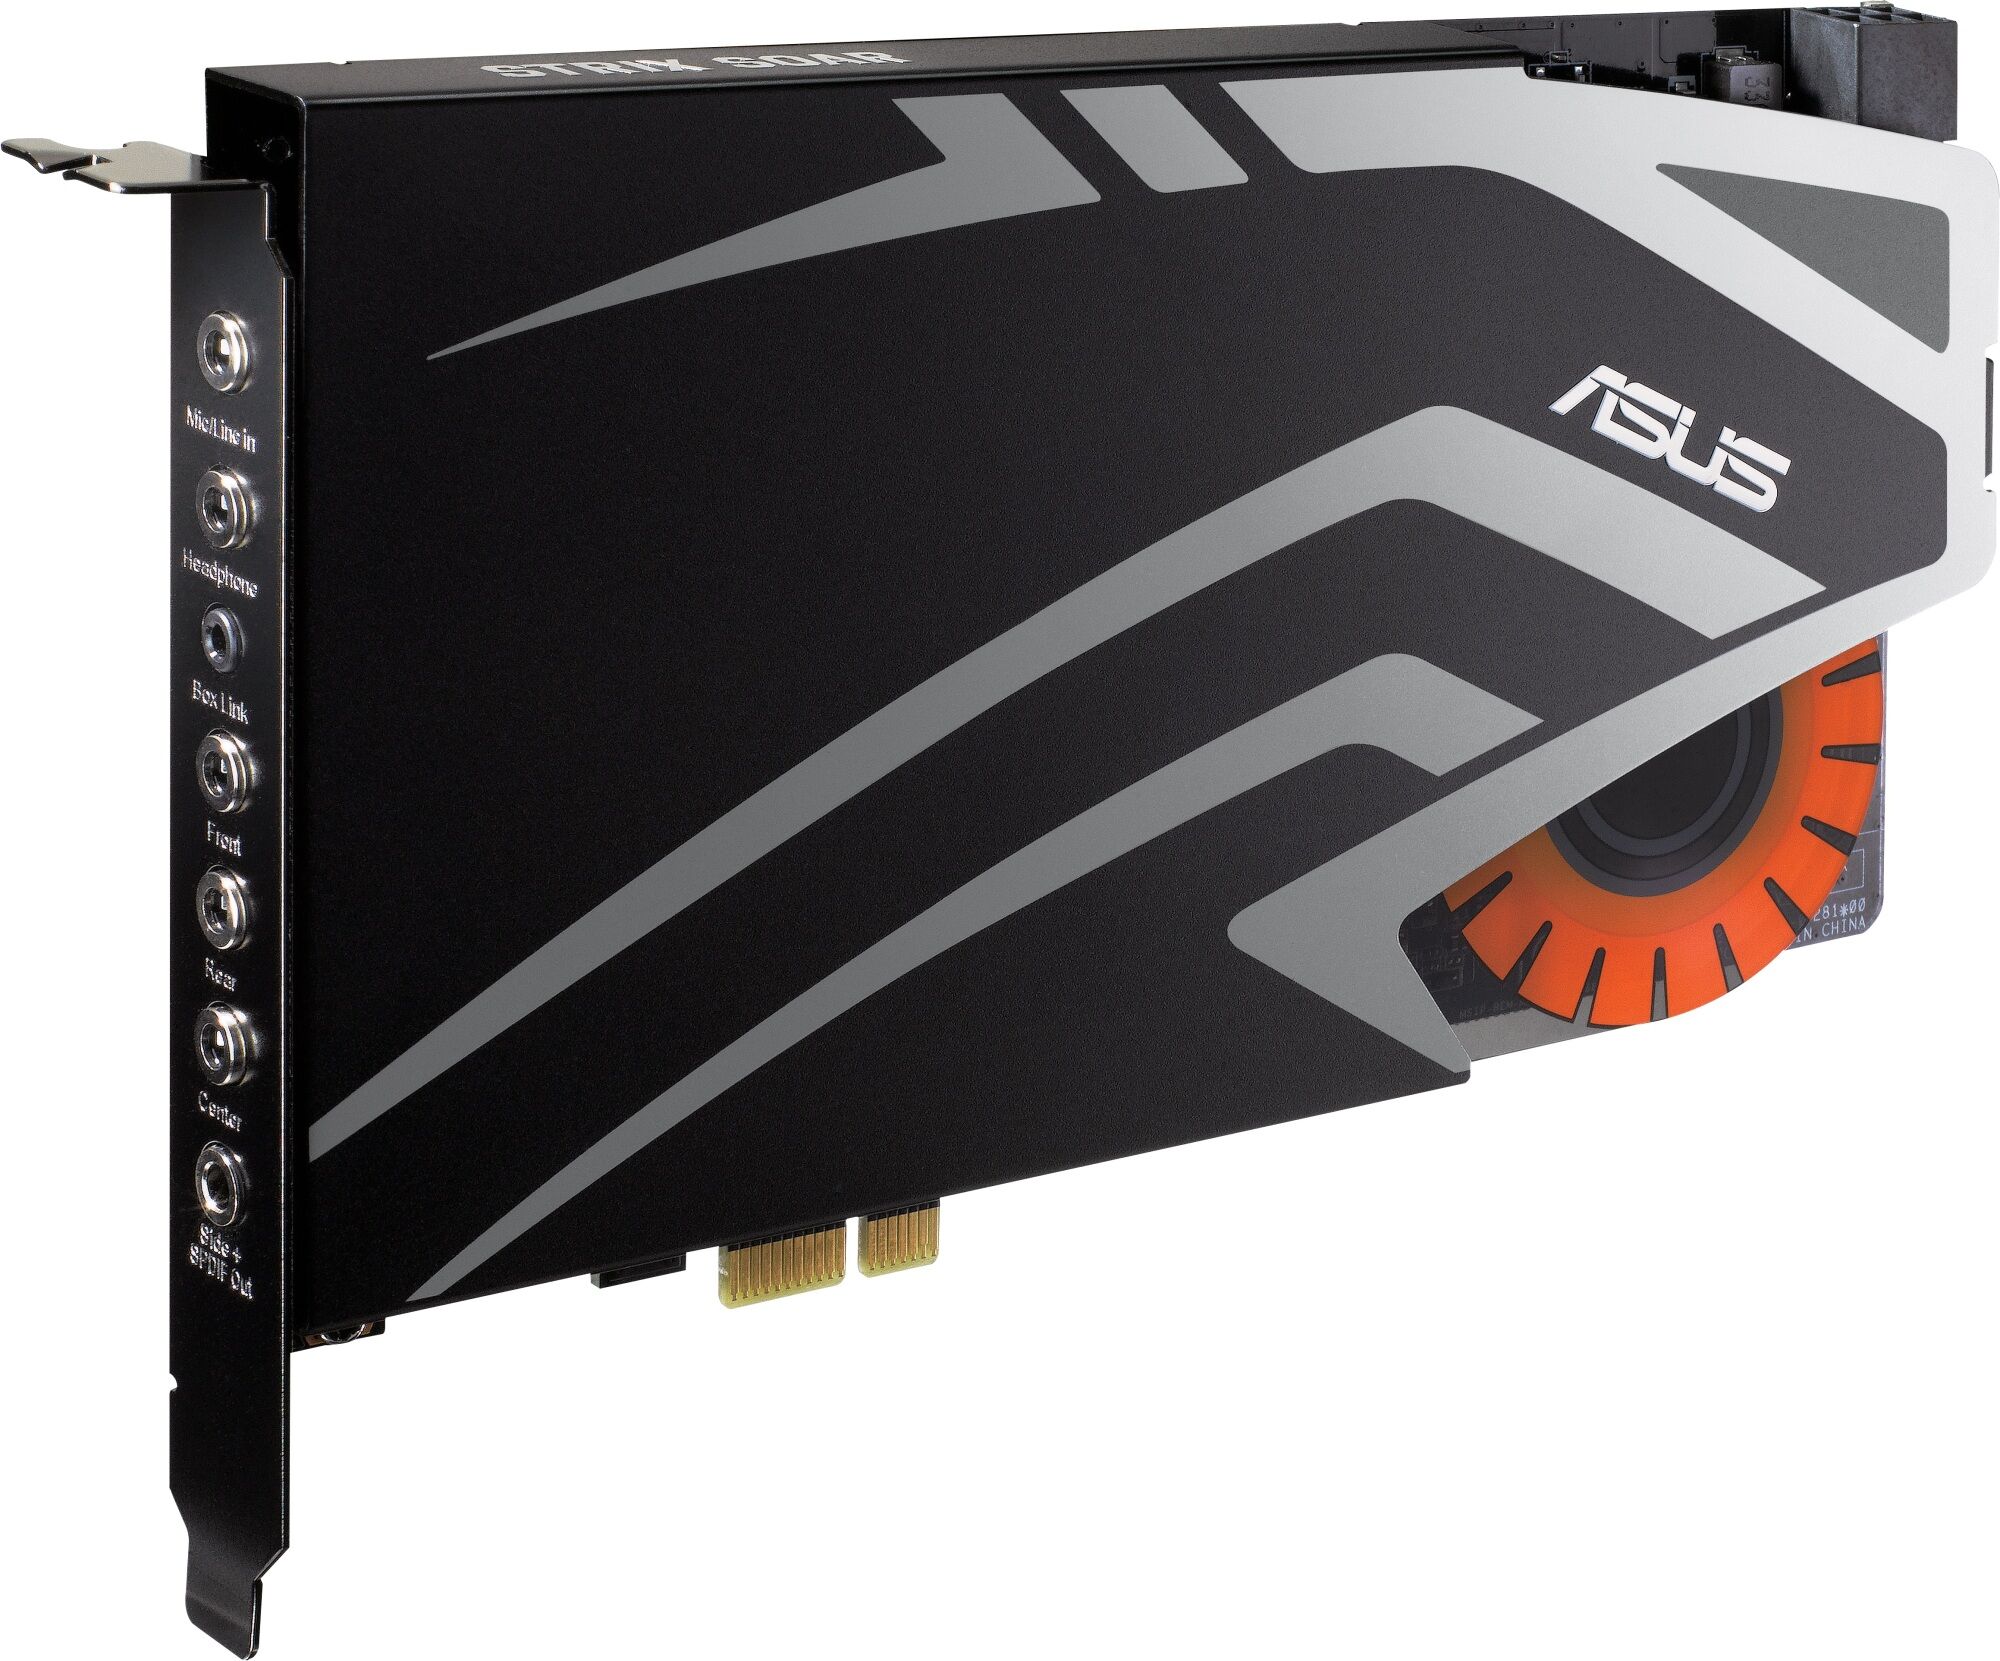 Asus Strix Soar 7.1 PCIe äänikortti